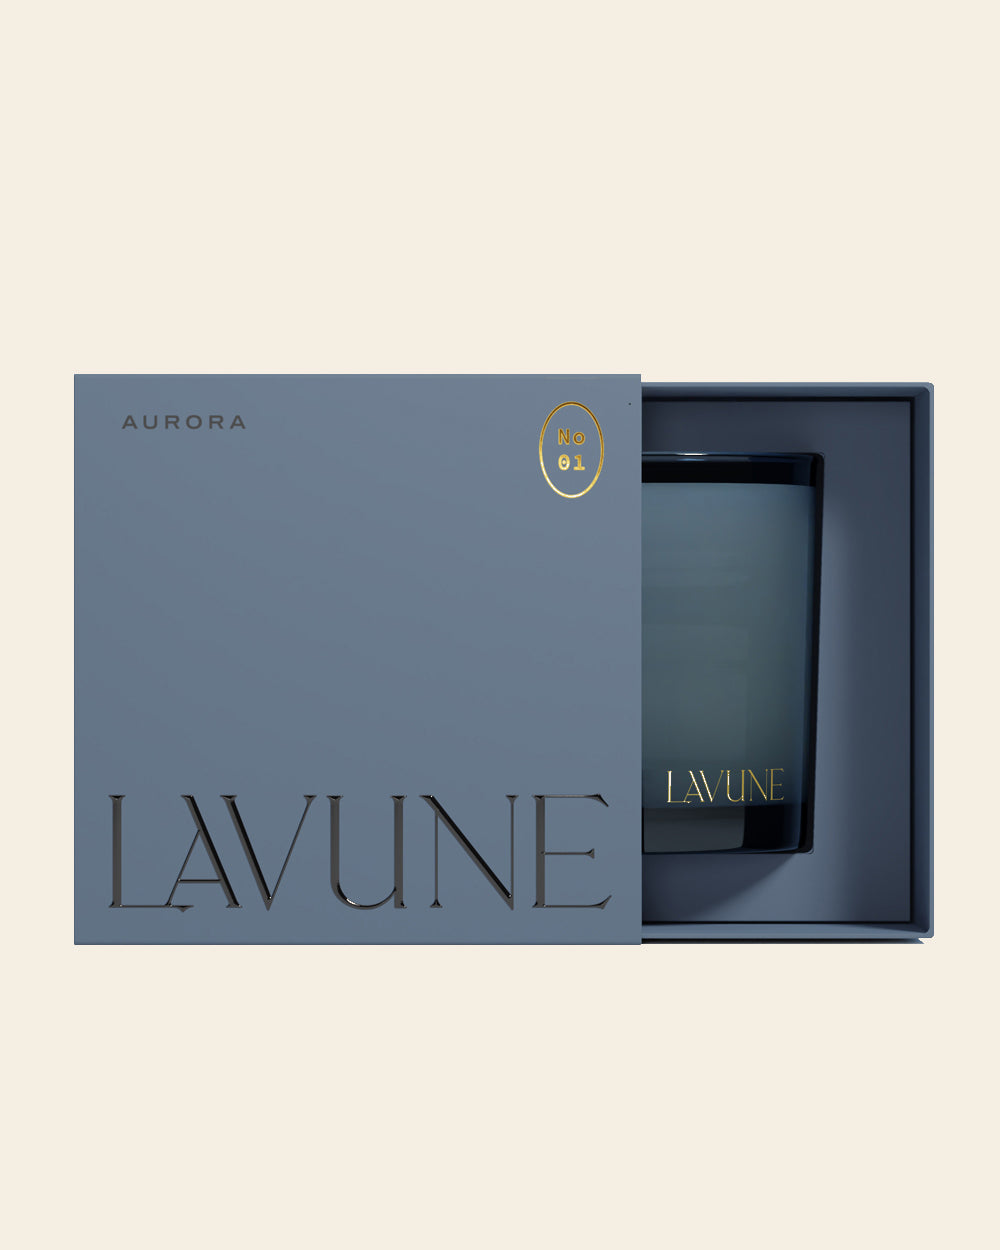 Lavune - Aurora luxury candle